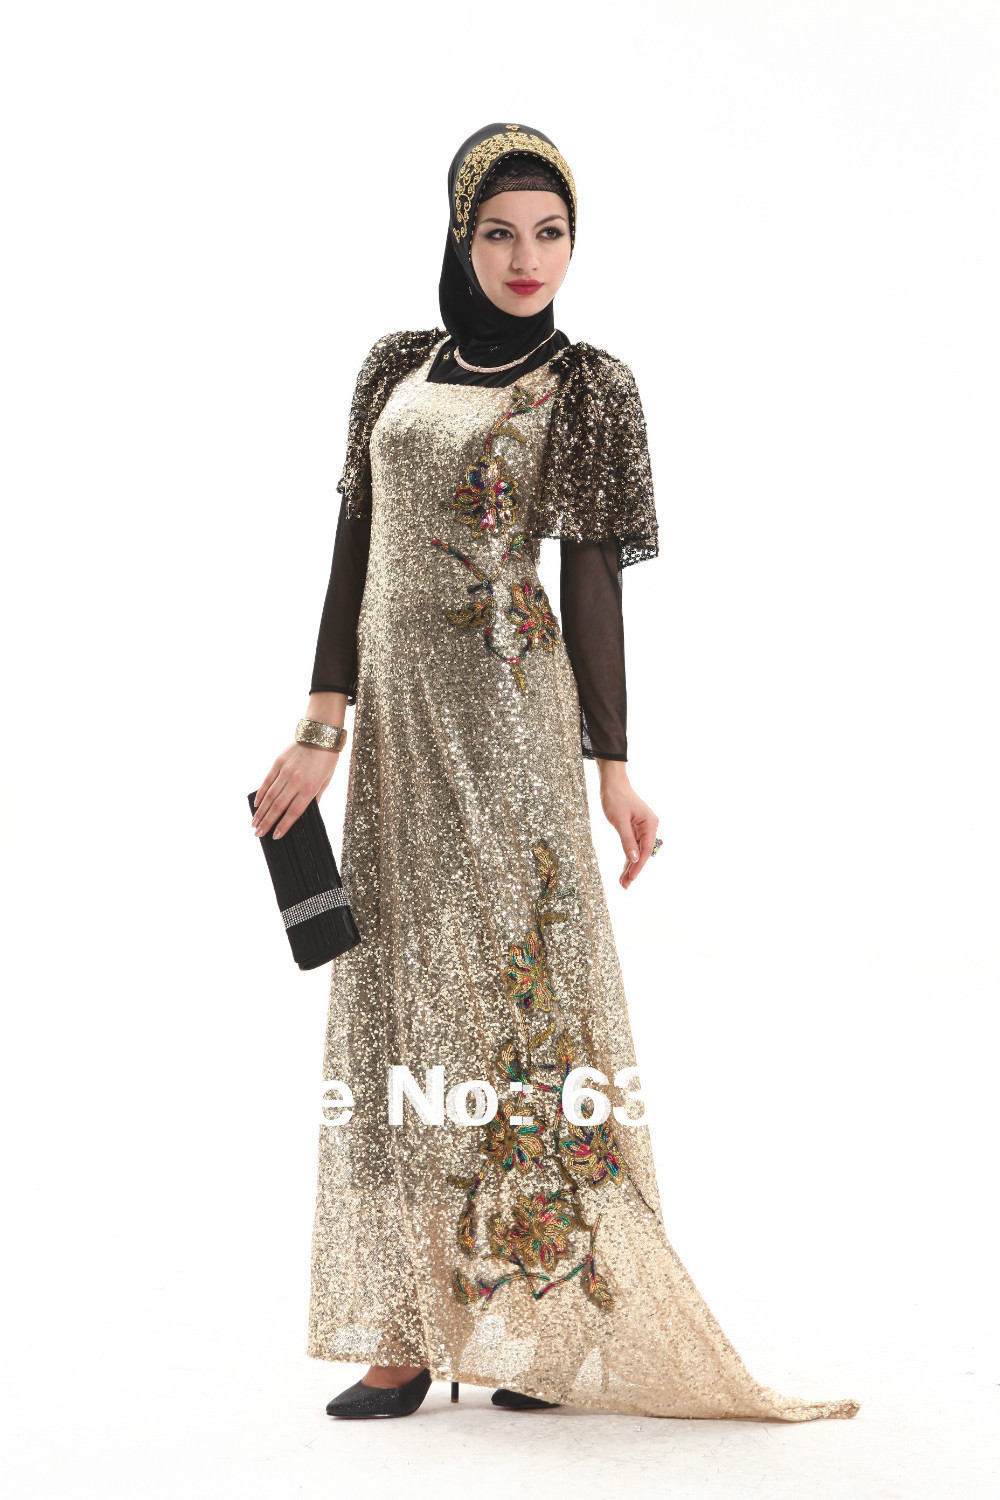 Latest-designed-Fashion-and-Elegant-Muslim-Long-Dress-Arabic-Muslim-lady-s-abaya-clothing-wp0003.jpg